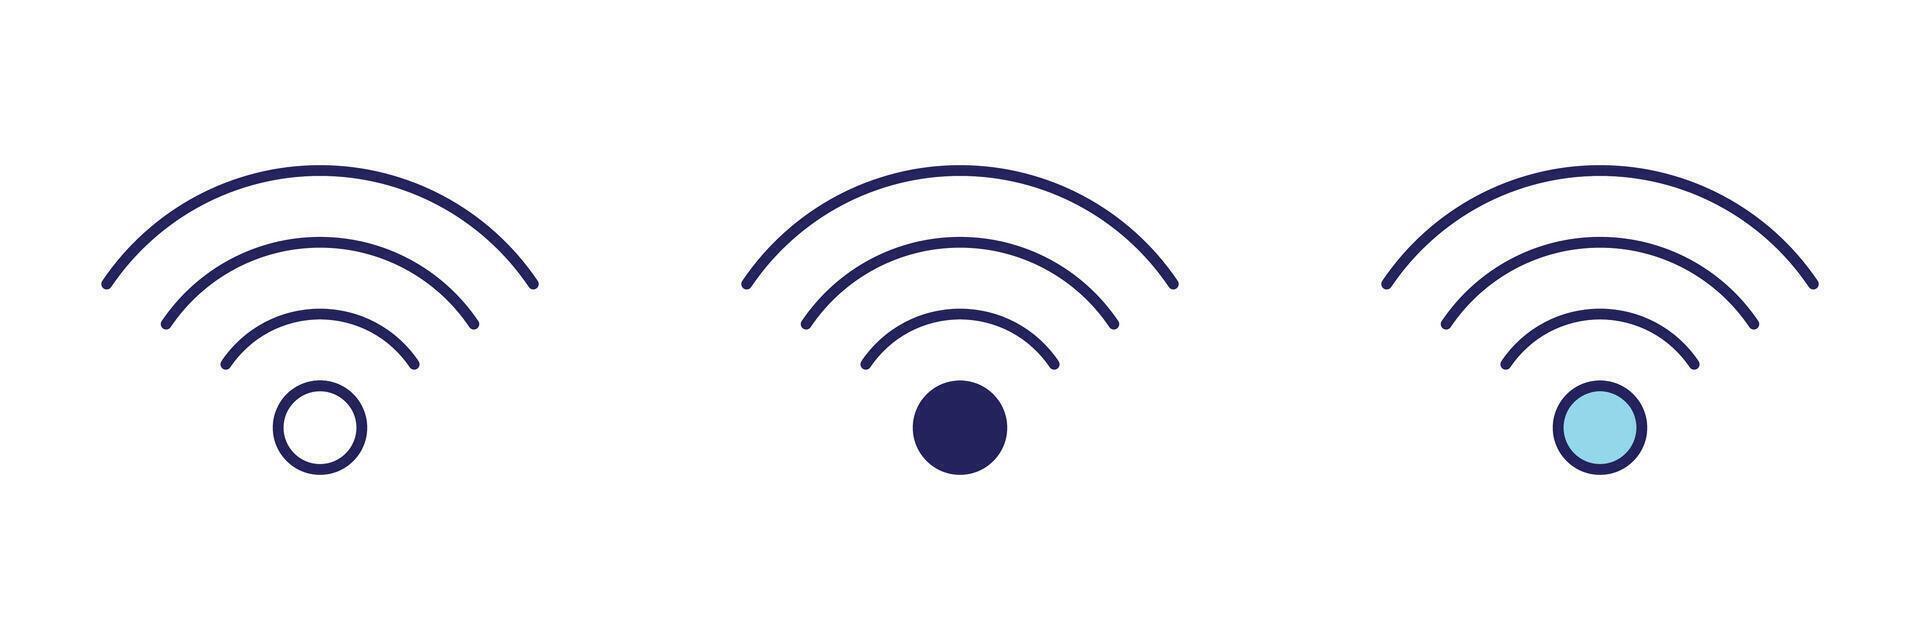 Wifi icono - navegación conjunto vector